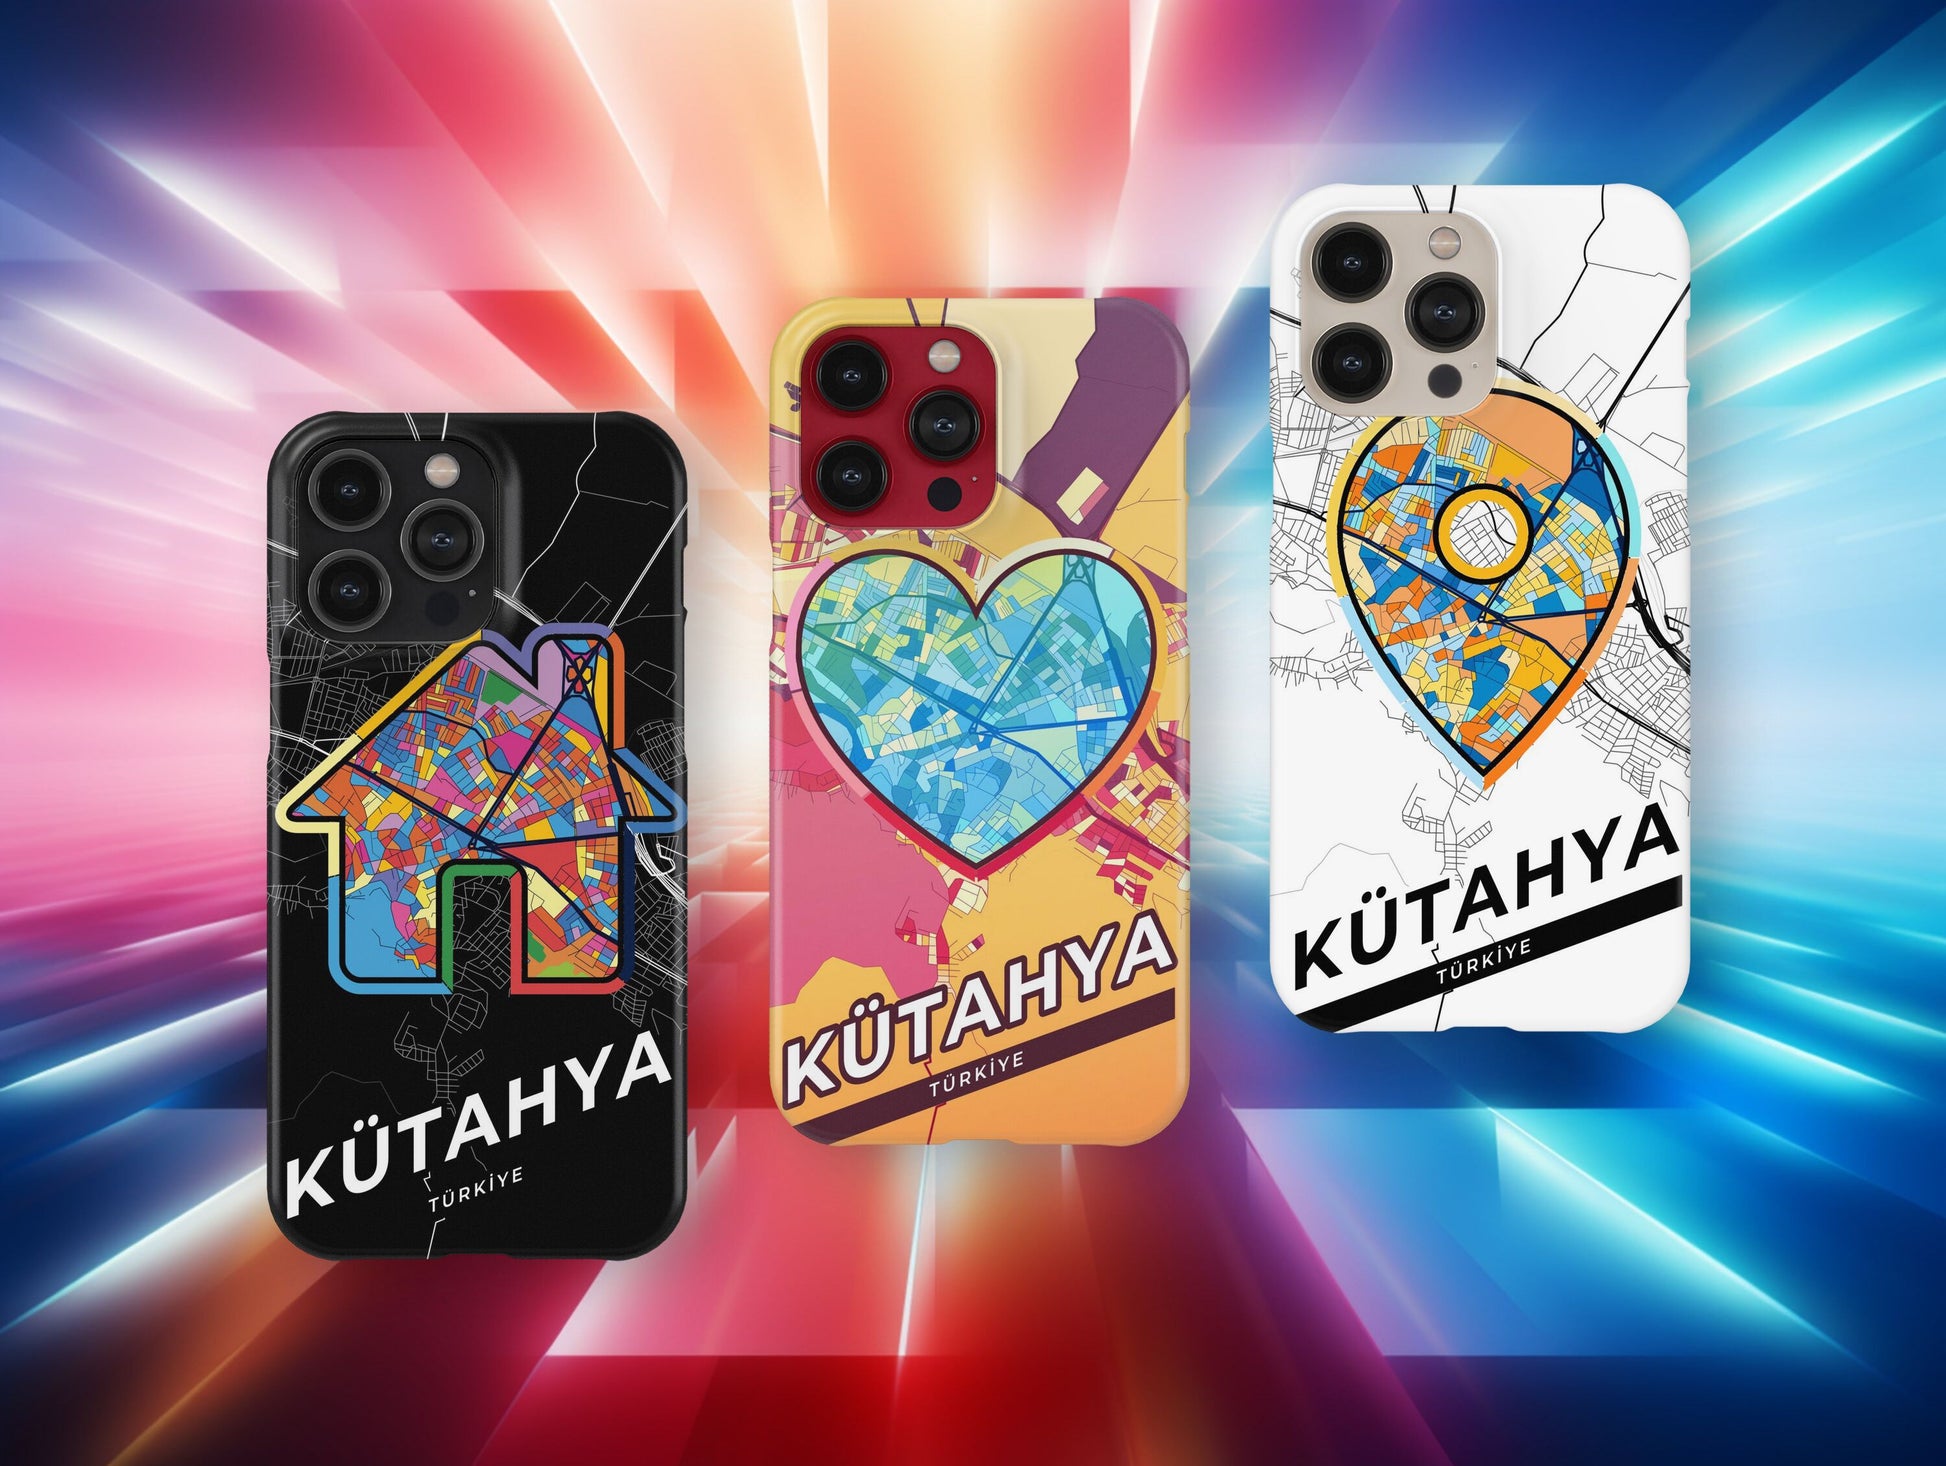 Kütahya Turkey slim phone case with colorful icon. Birthday, wedding or housewarming gift. Couple match cases.